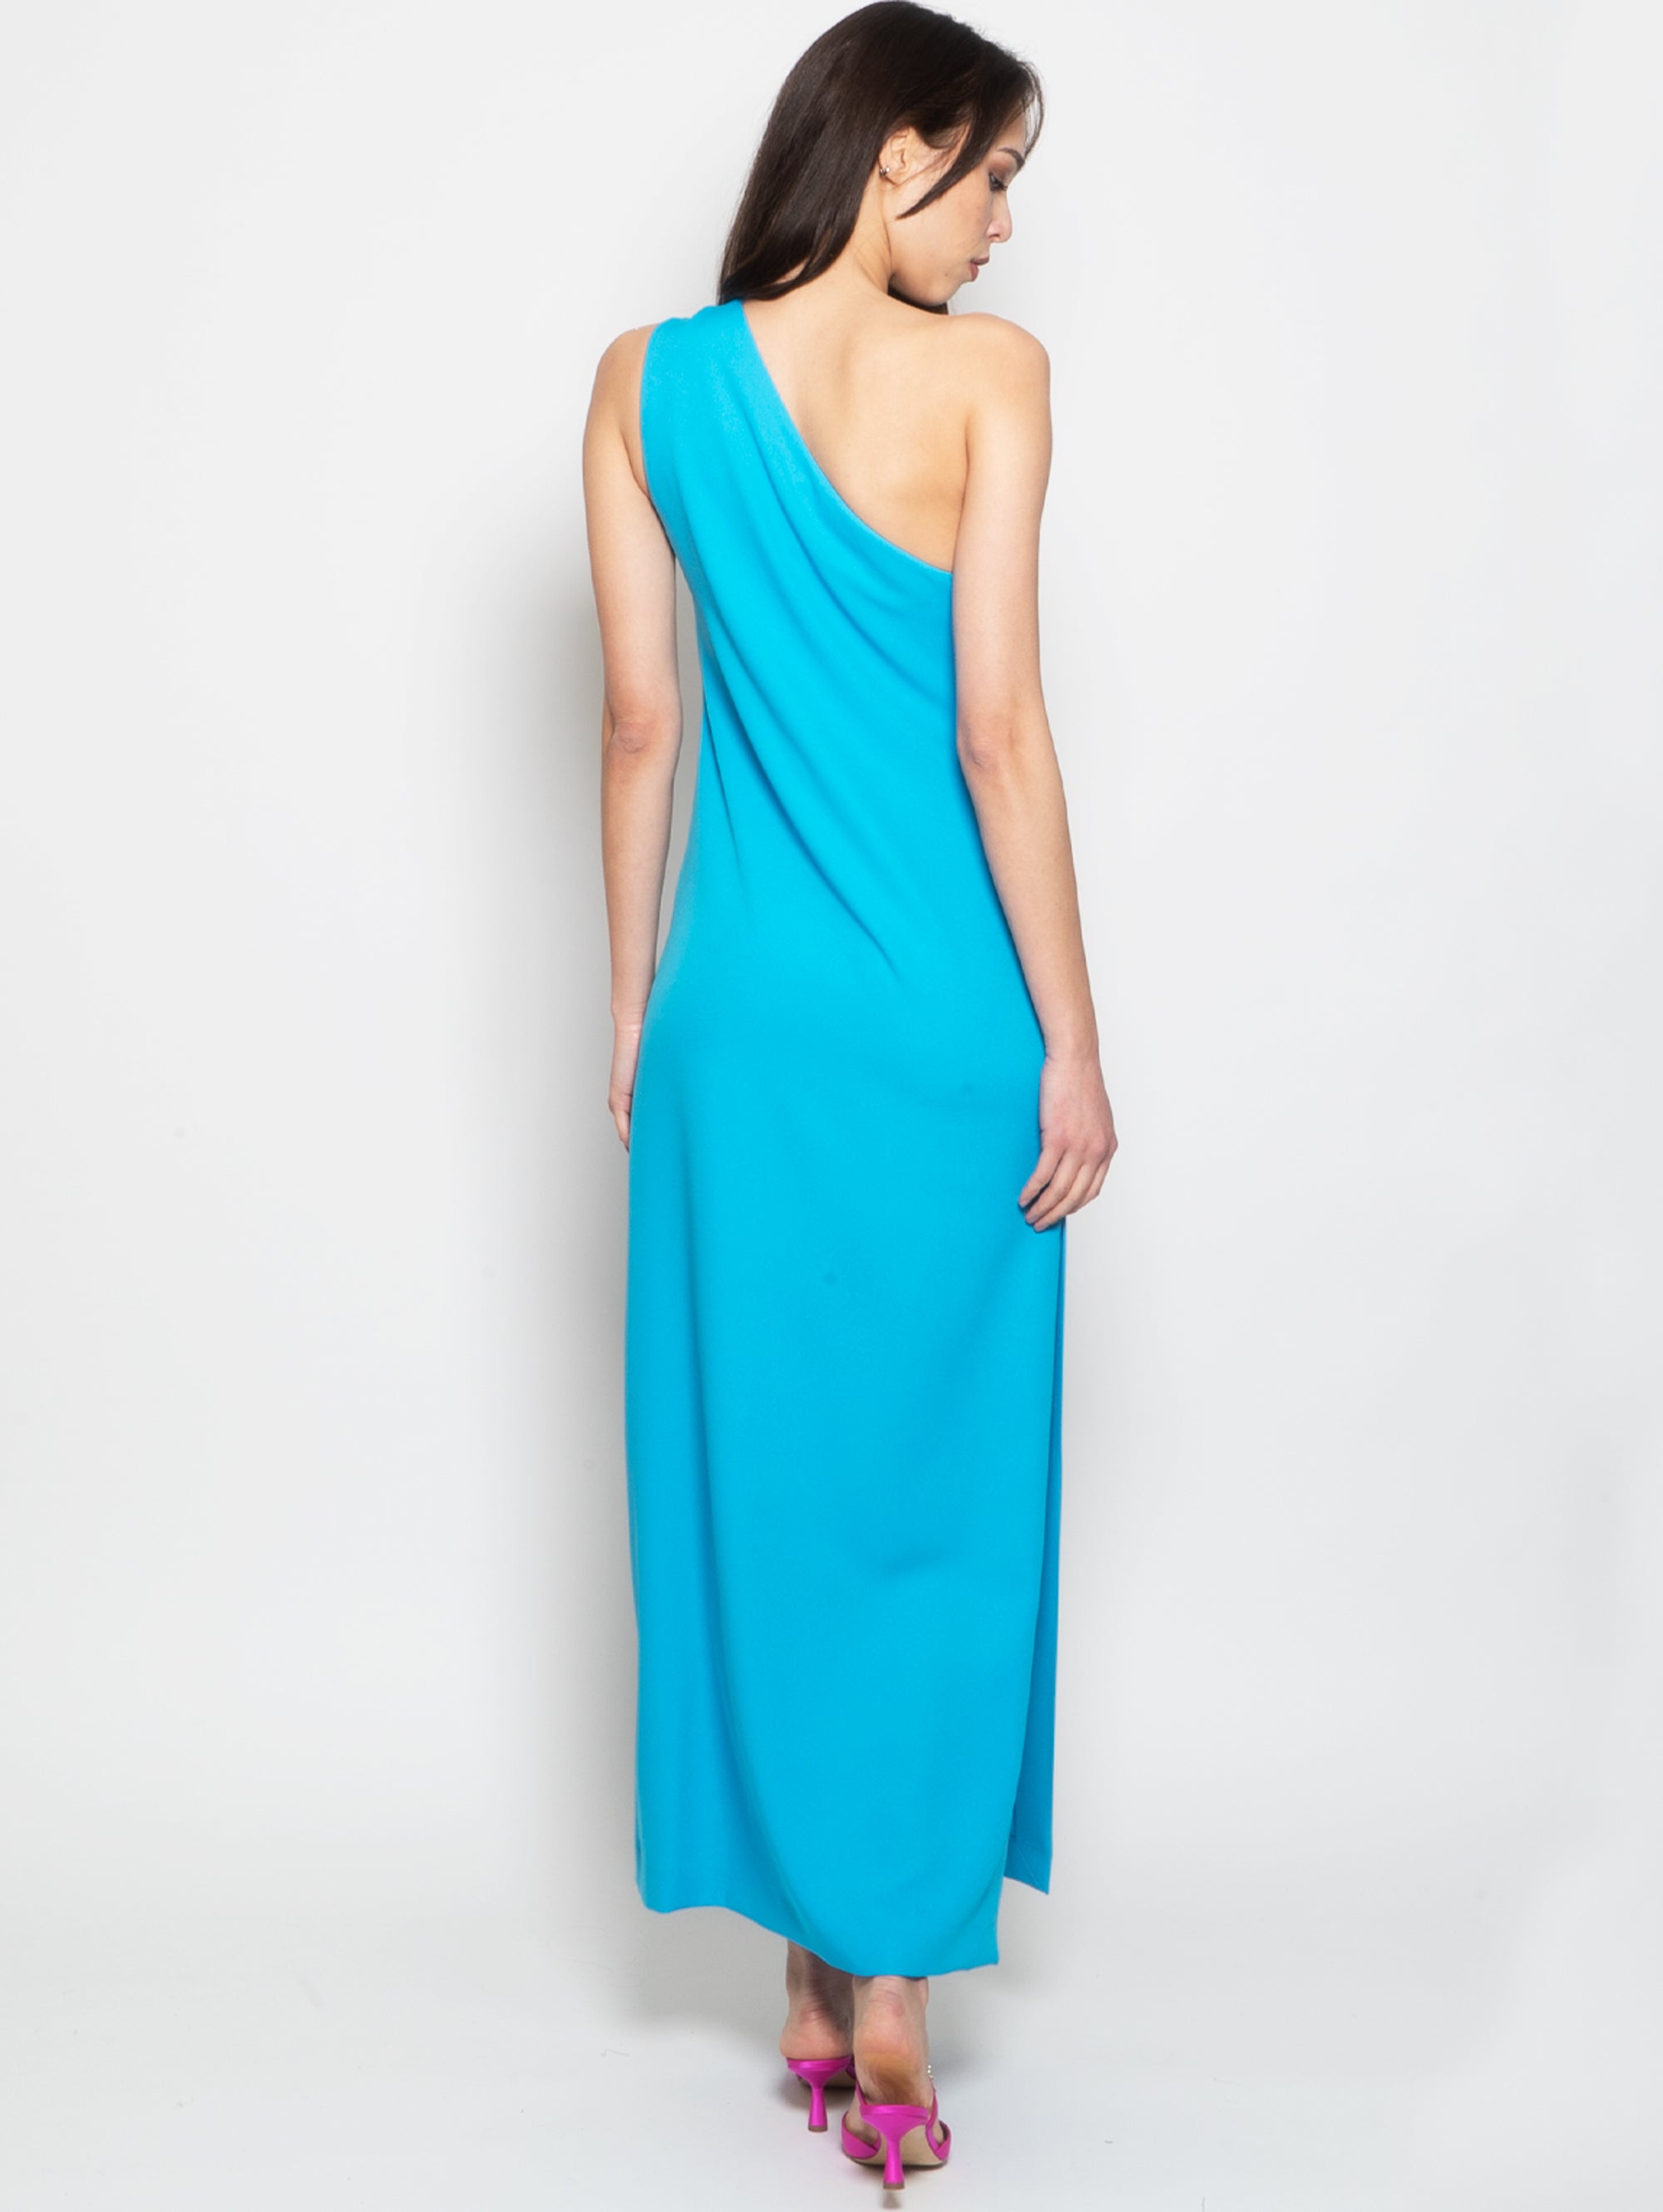 Turquoise One Shoulder Long Dress